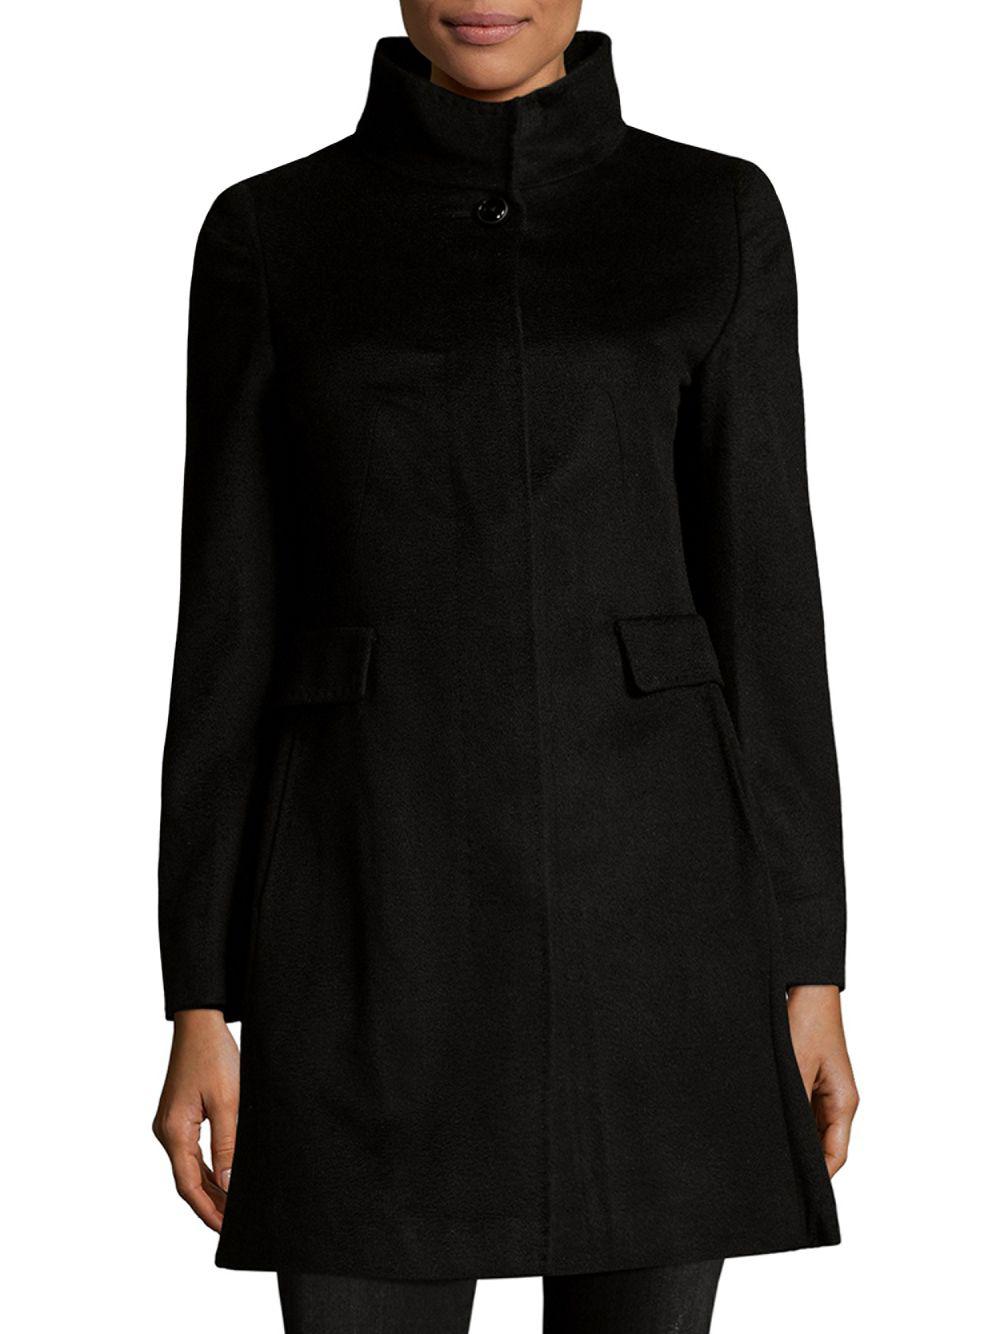 Max Mara Stand Collar Wool Coat in Black | Lyst